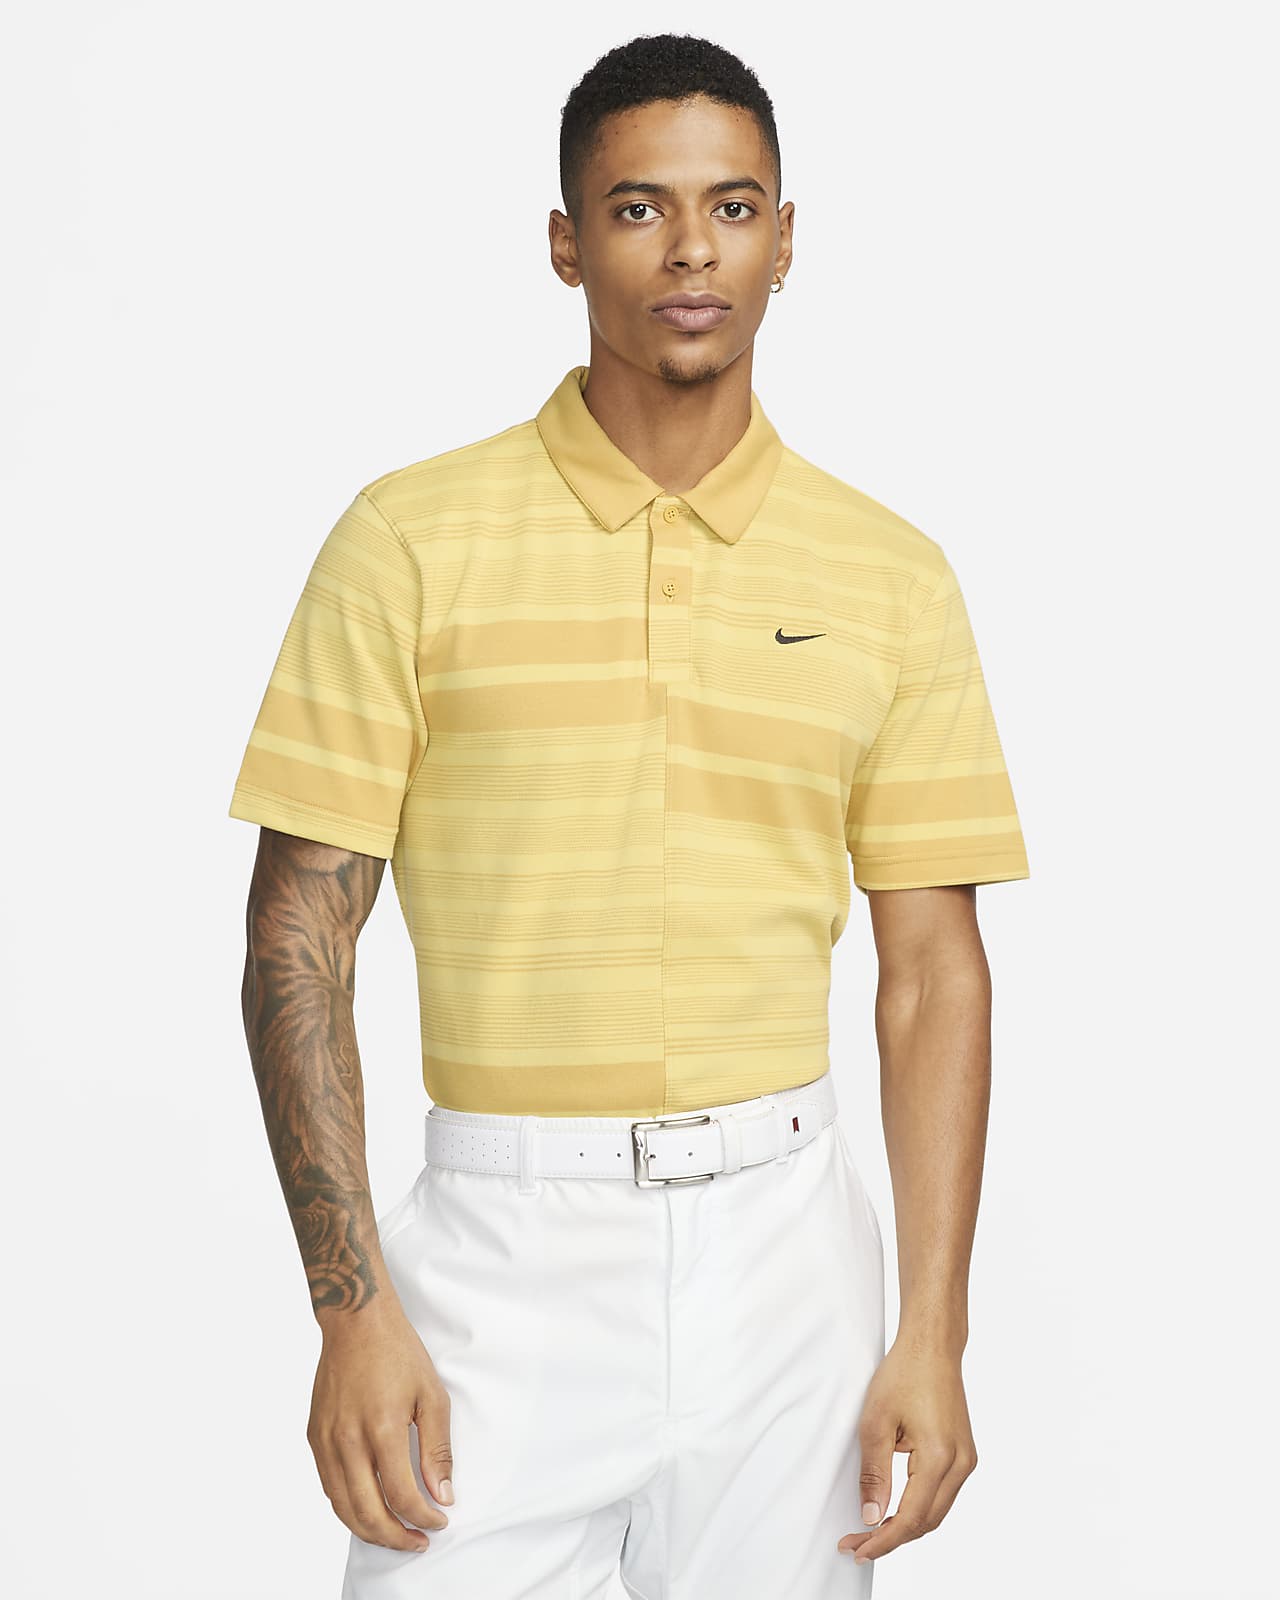 Nike Dri-FIT Unscripted Men's Golf Polo